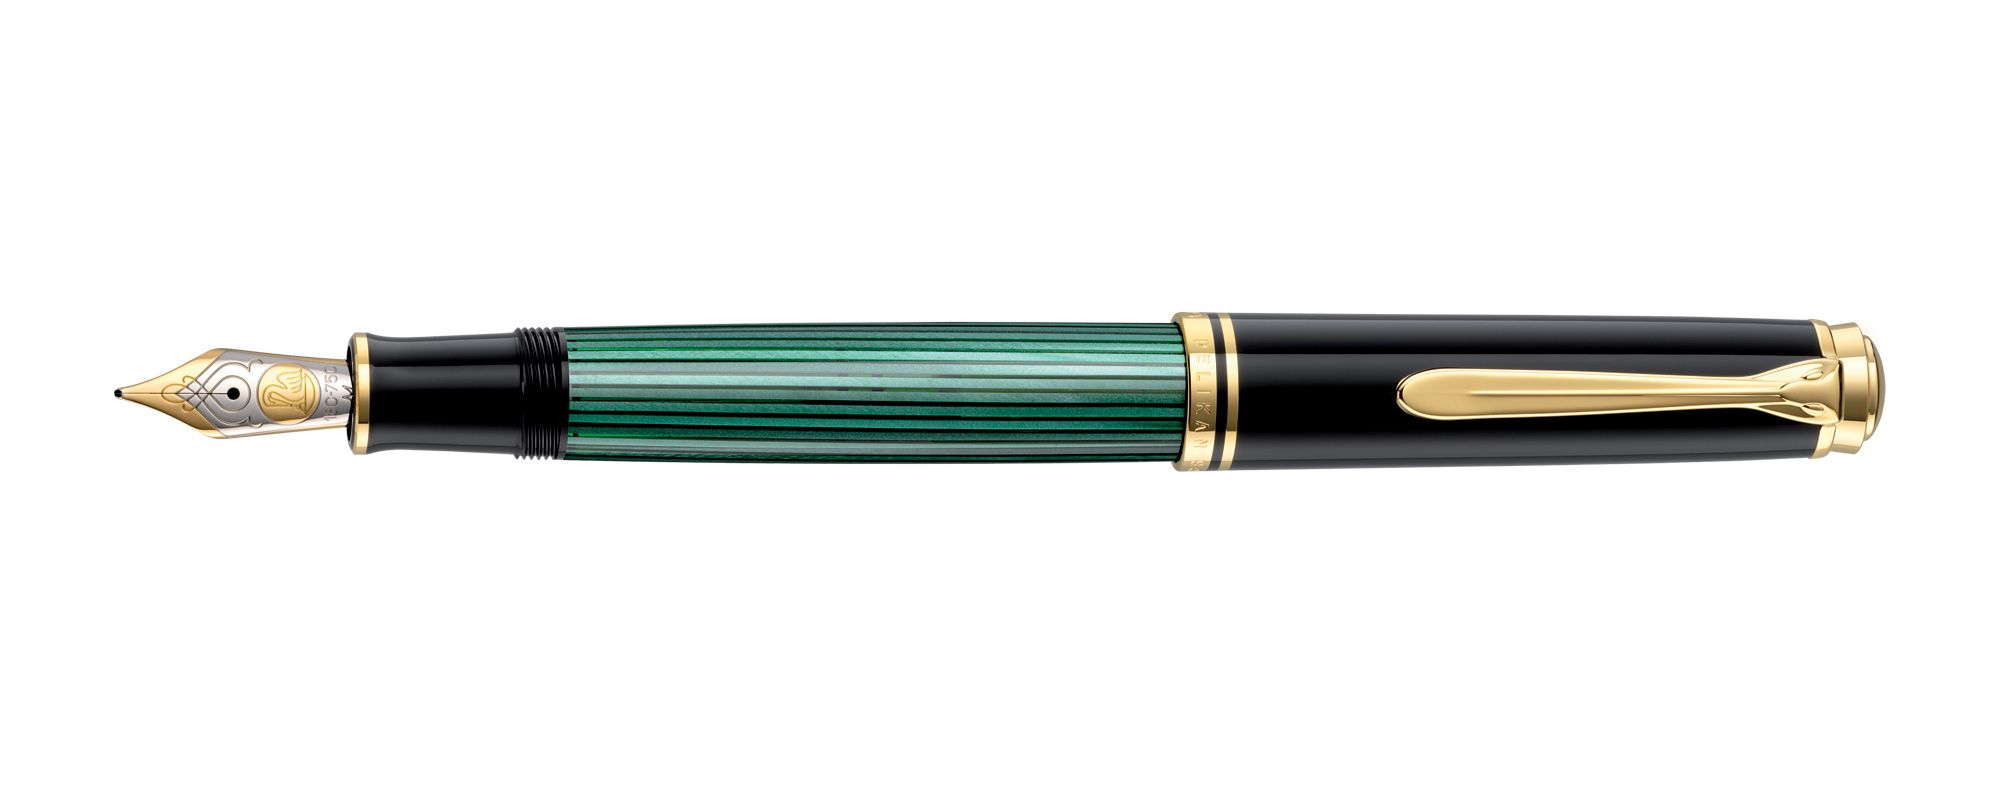 Pelikan Souverän M 800 Penna Stilografica Pennino Oro 18Kt - Verde